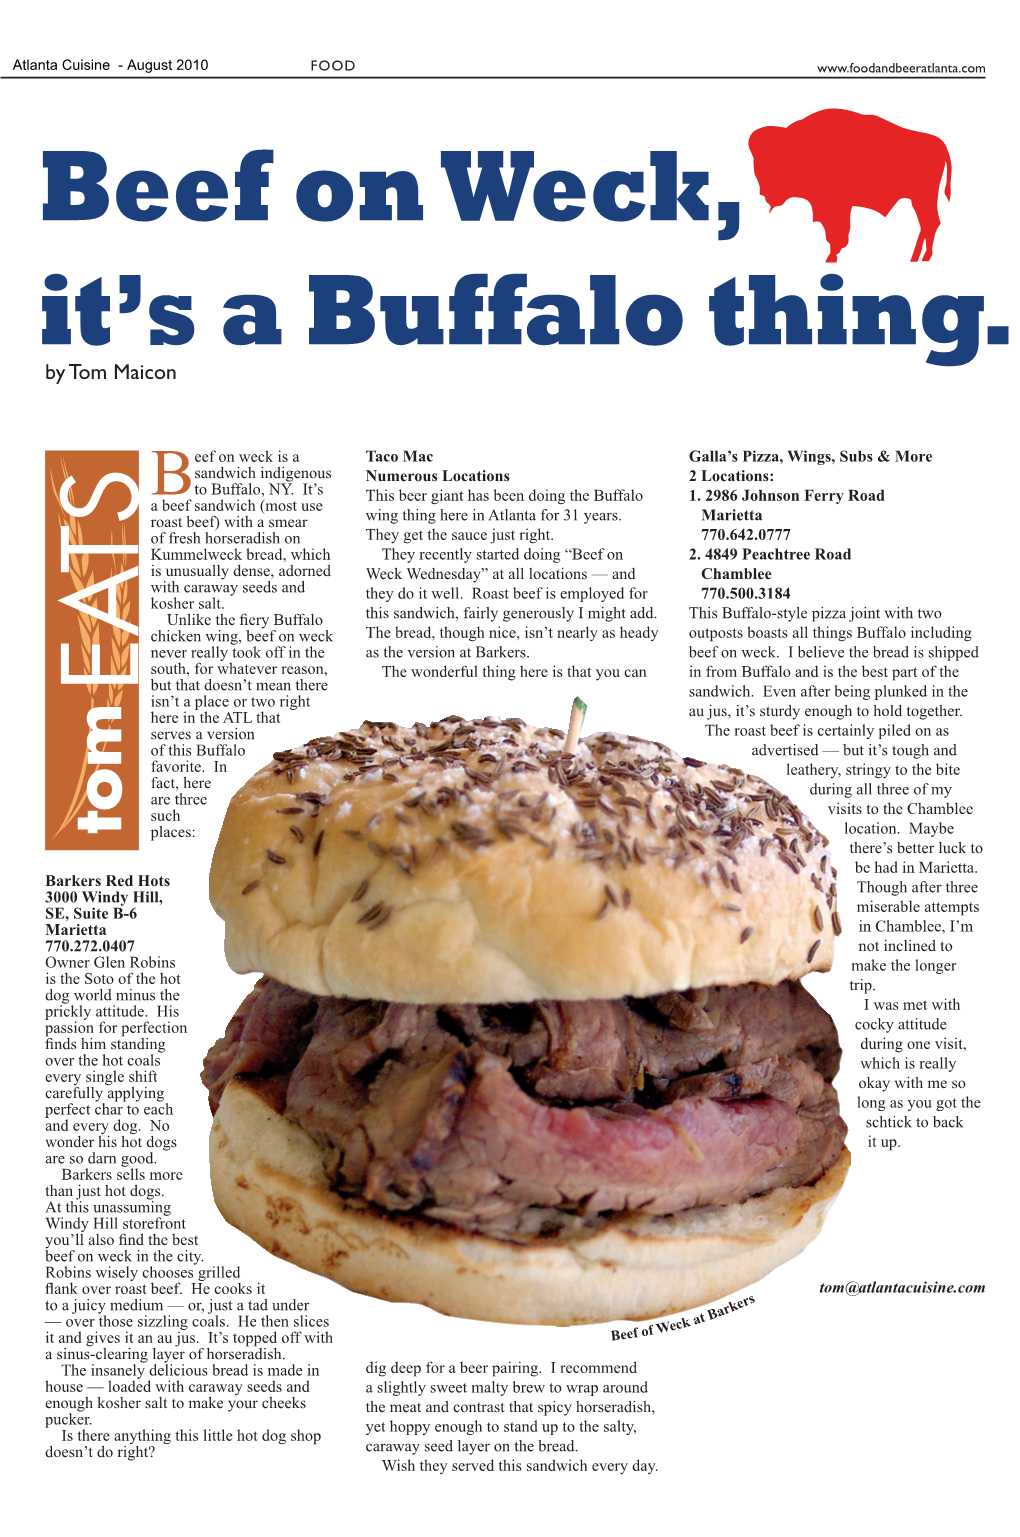 Beef on Weck, It's a Buffalo Thing. EA TS